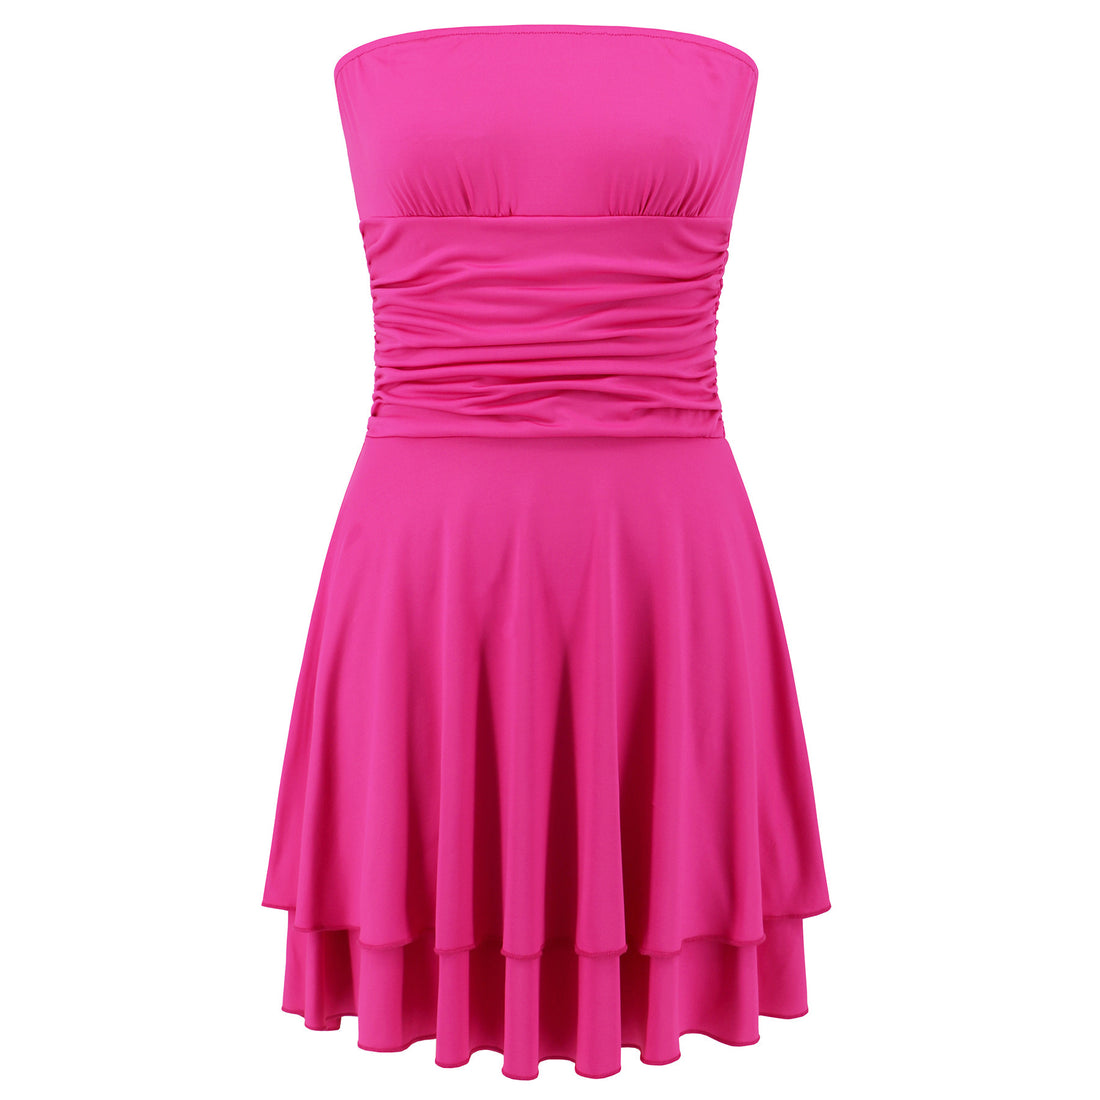 Colorwheel dress